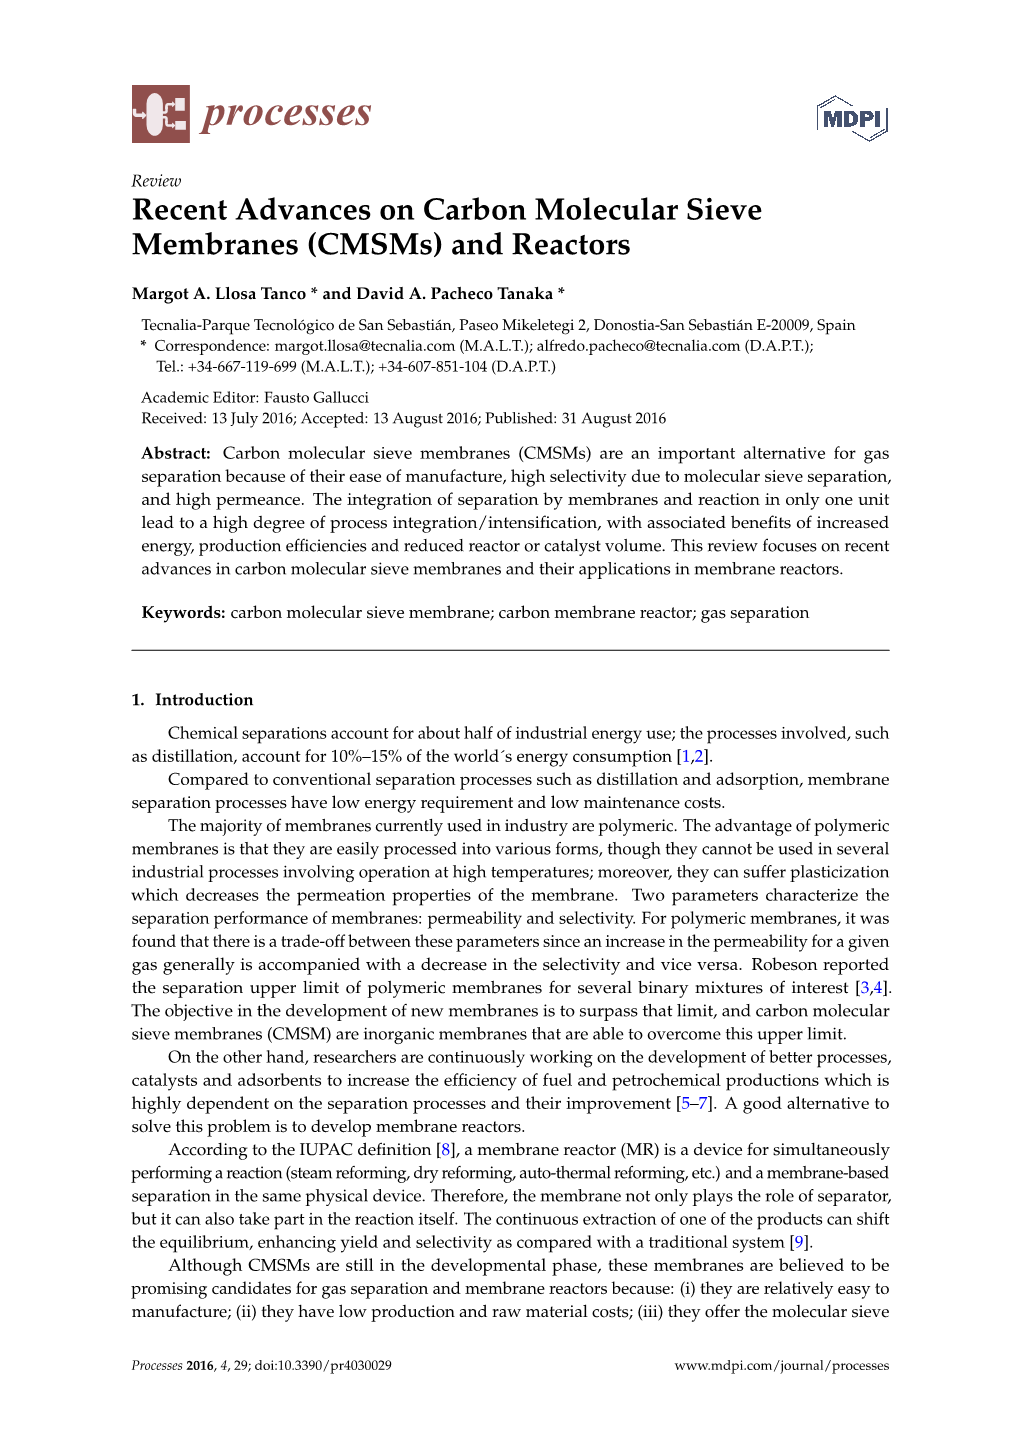 Recent Advances on Carbon Molecular Sieve Membranes (Cmsms) and Reactors